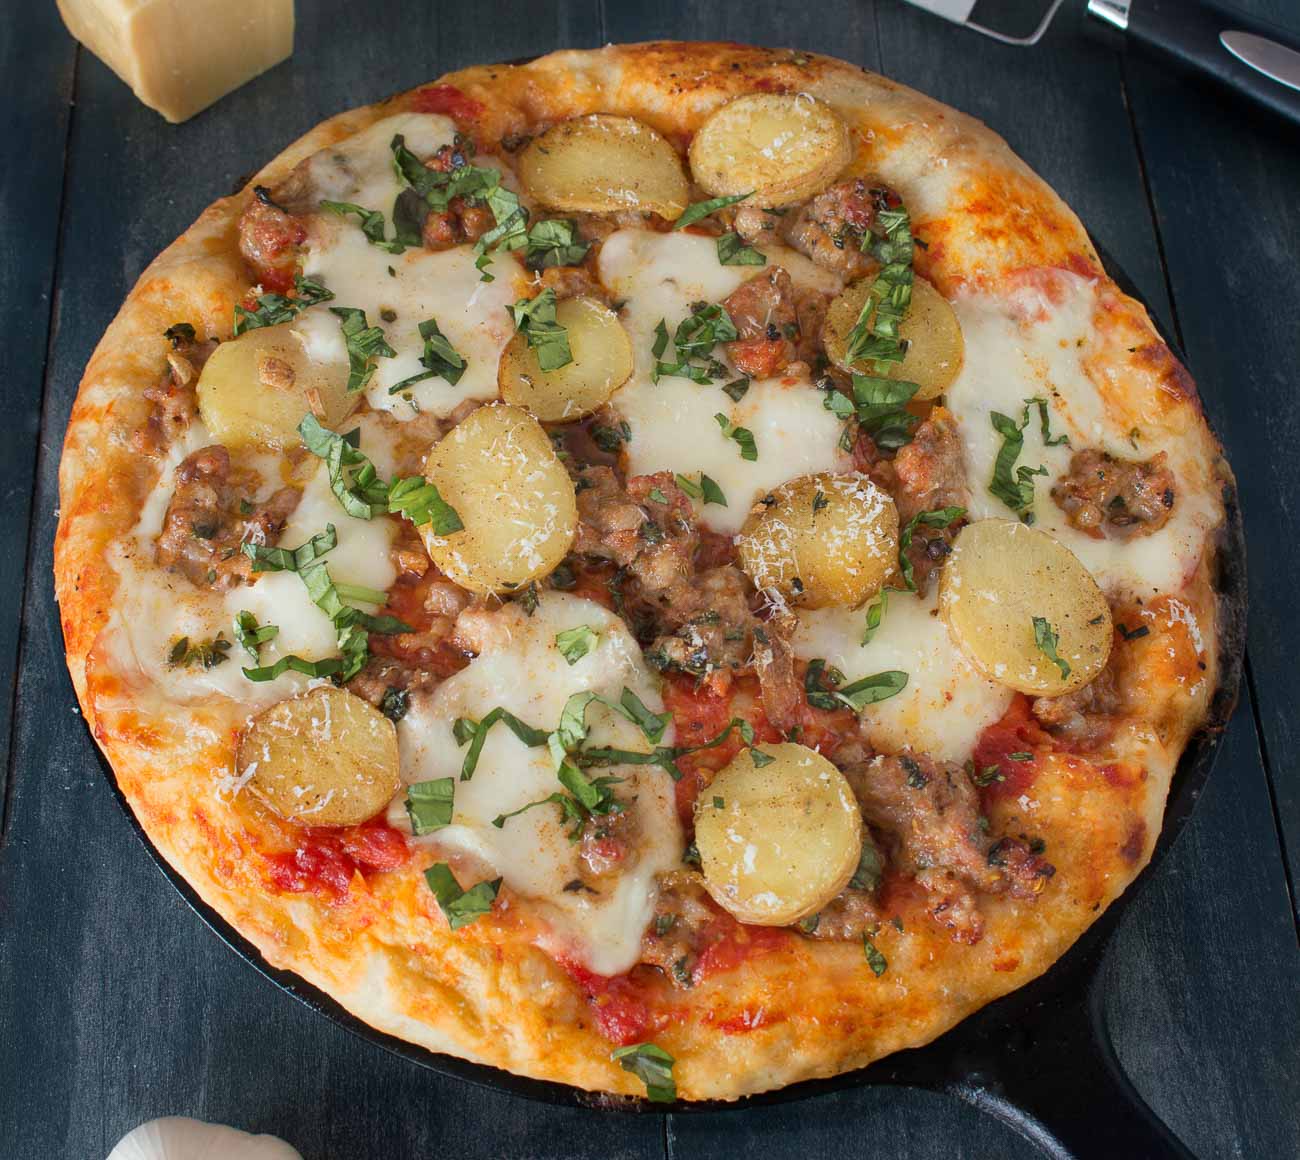 Gluten Free Skillet Pizza With Potato and Tapioca